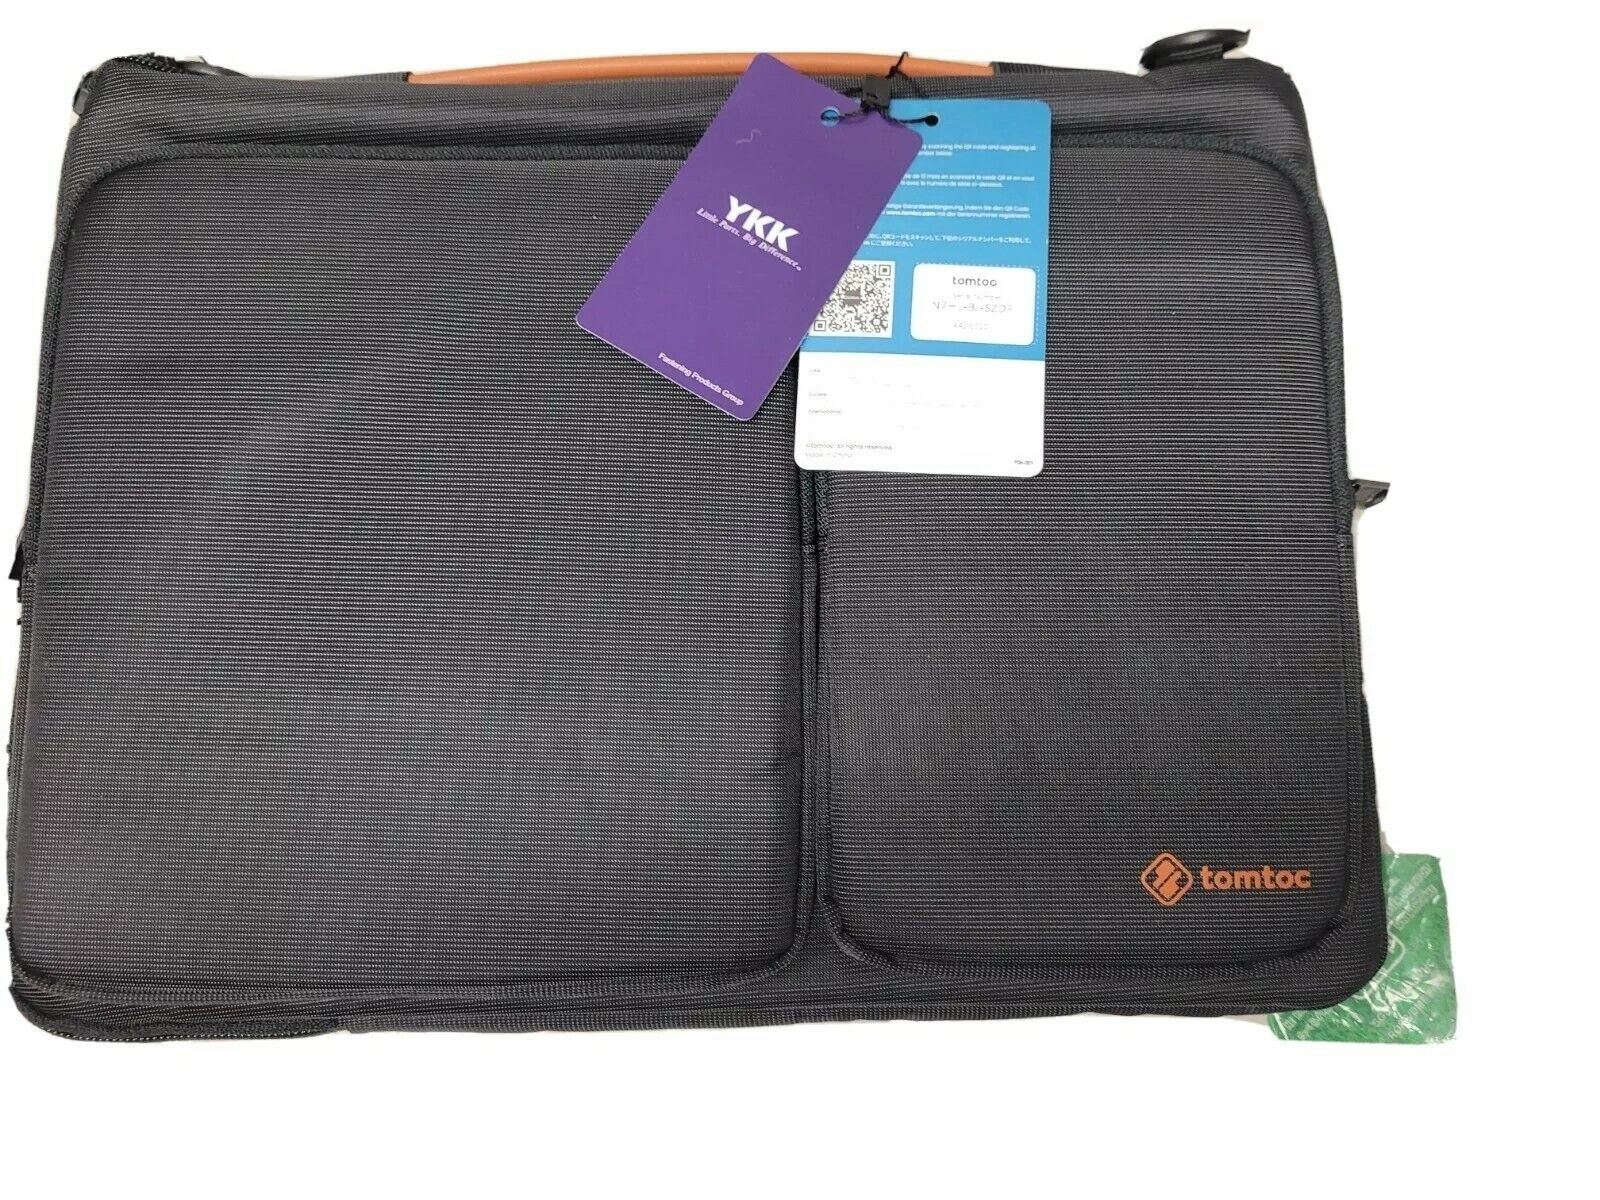 Tomtoc A42-C01D Laptop Case Shoulder Bag Waterproof Apple MacBook Microsoft  New